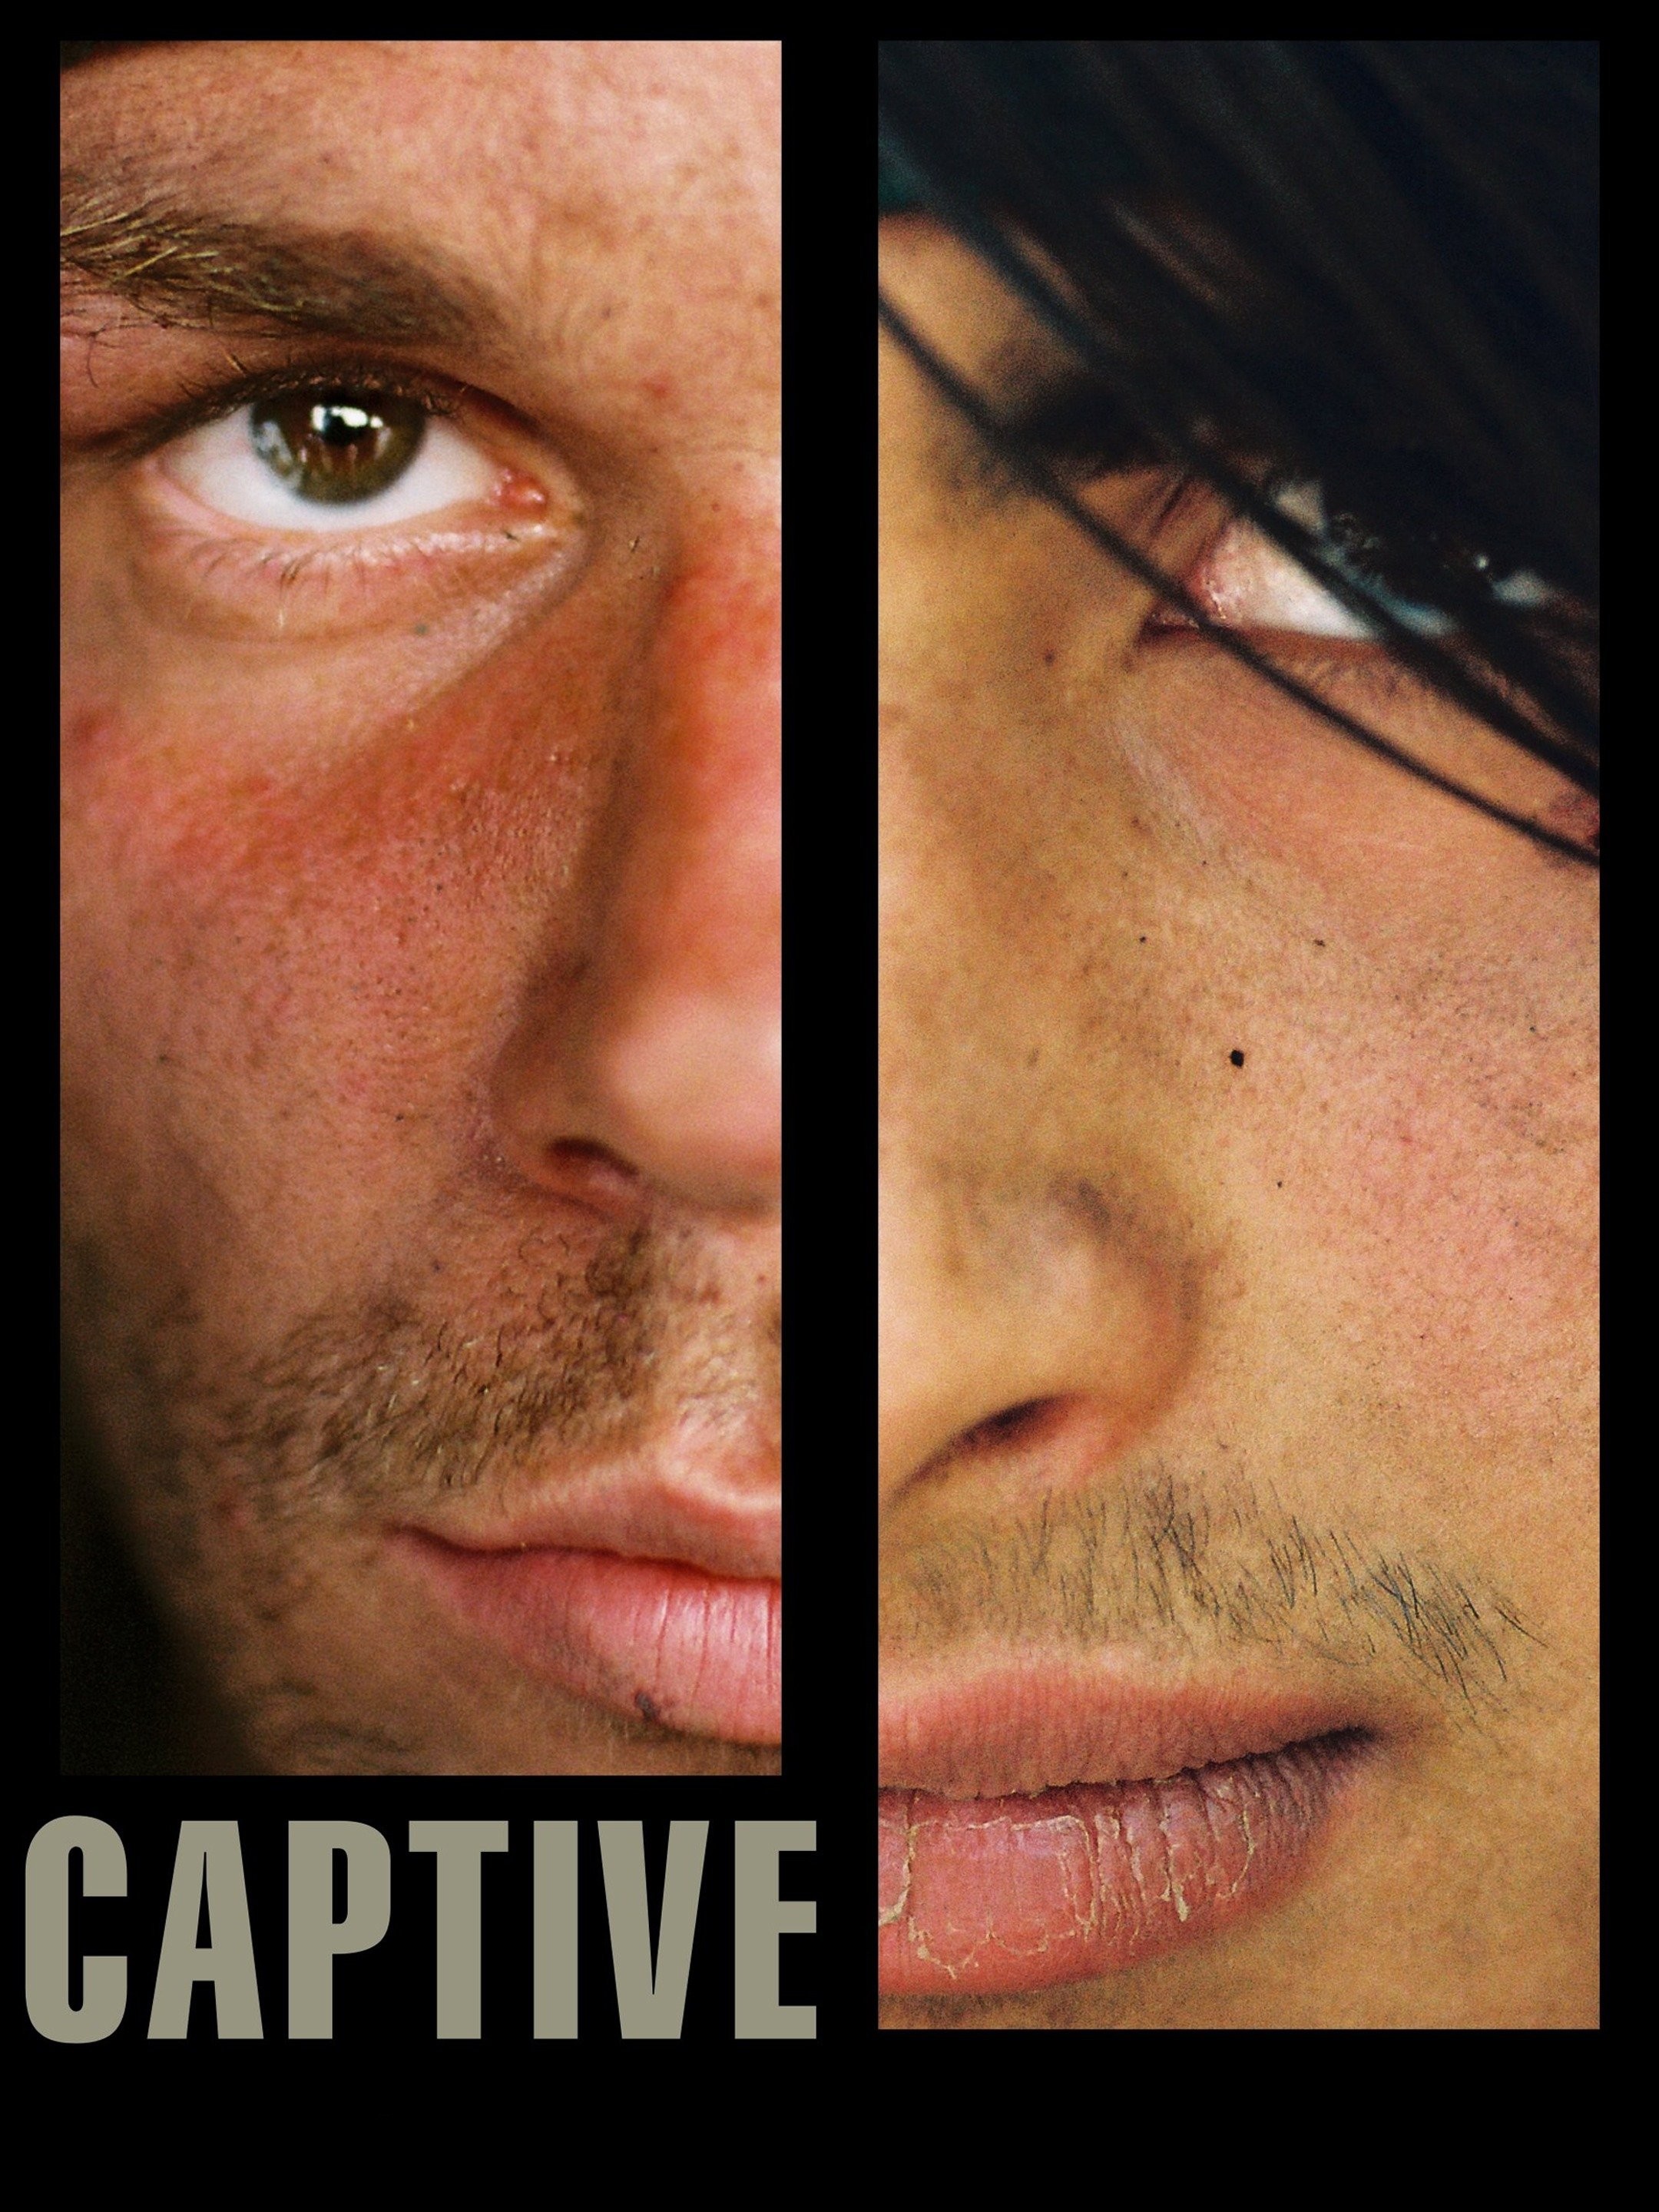 Captive (2008 film) - Wikipedia